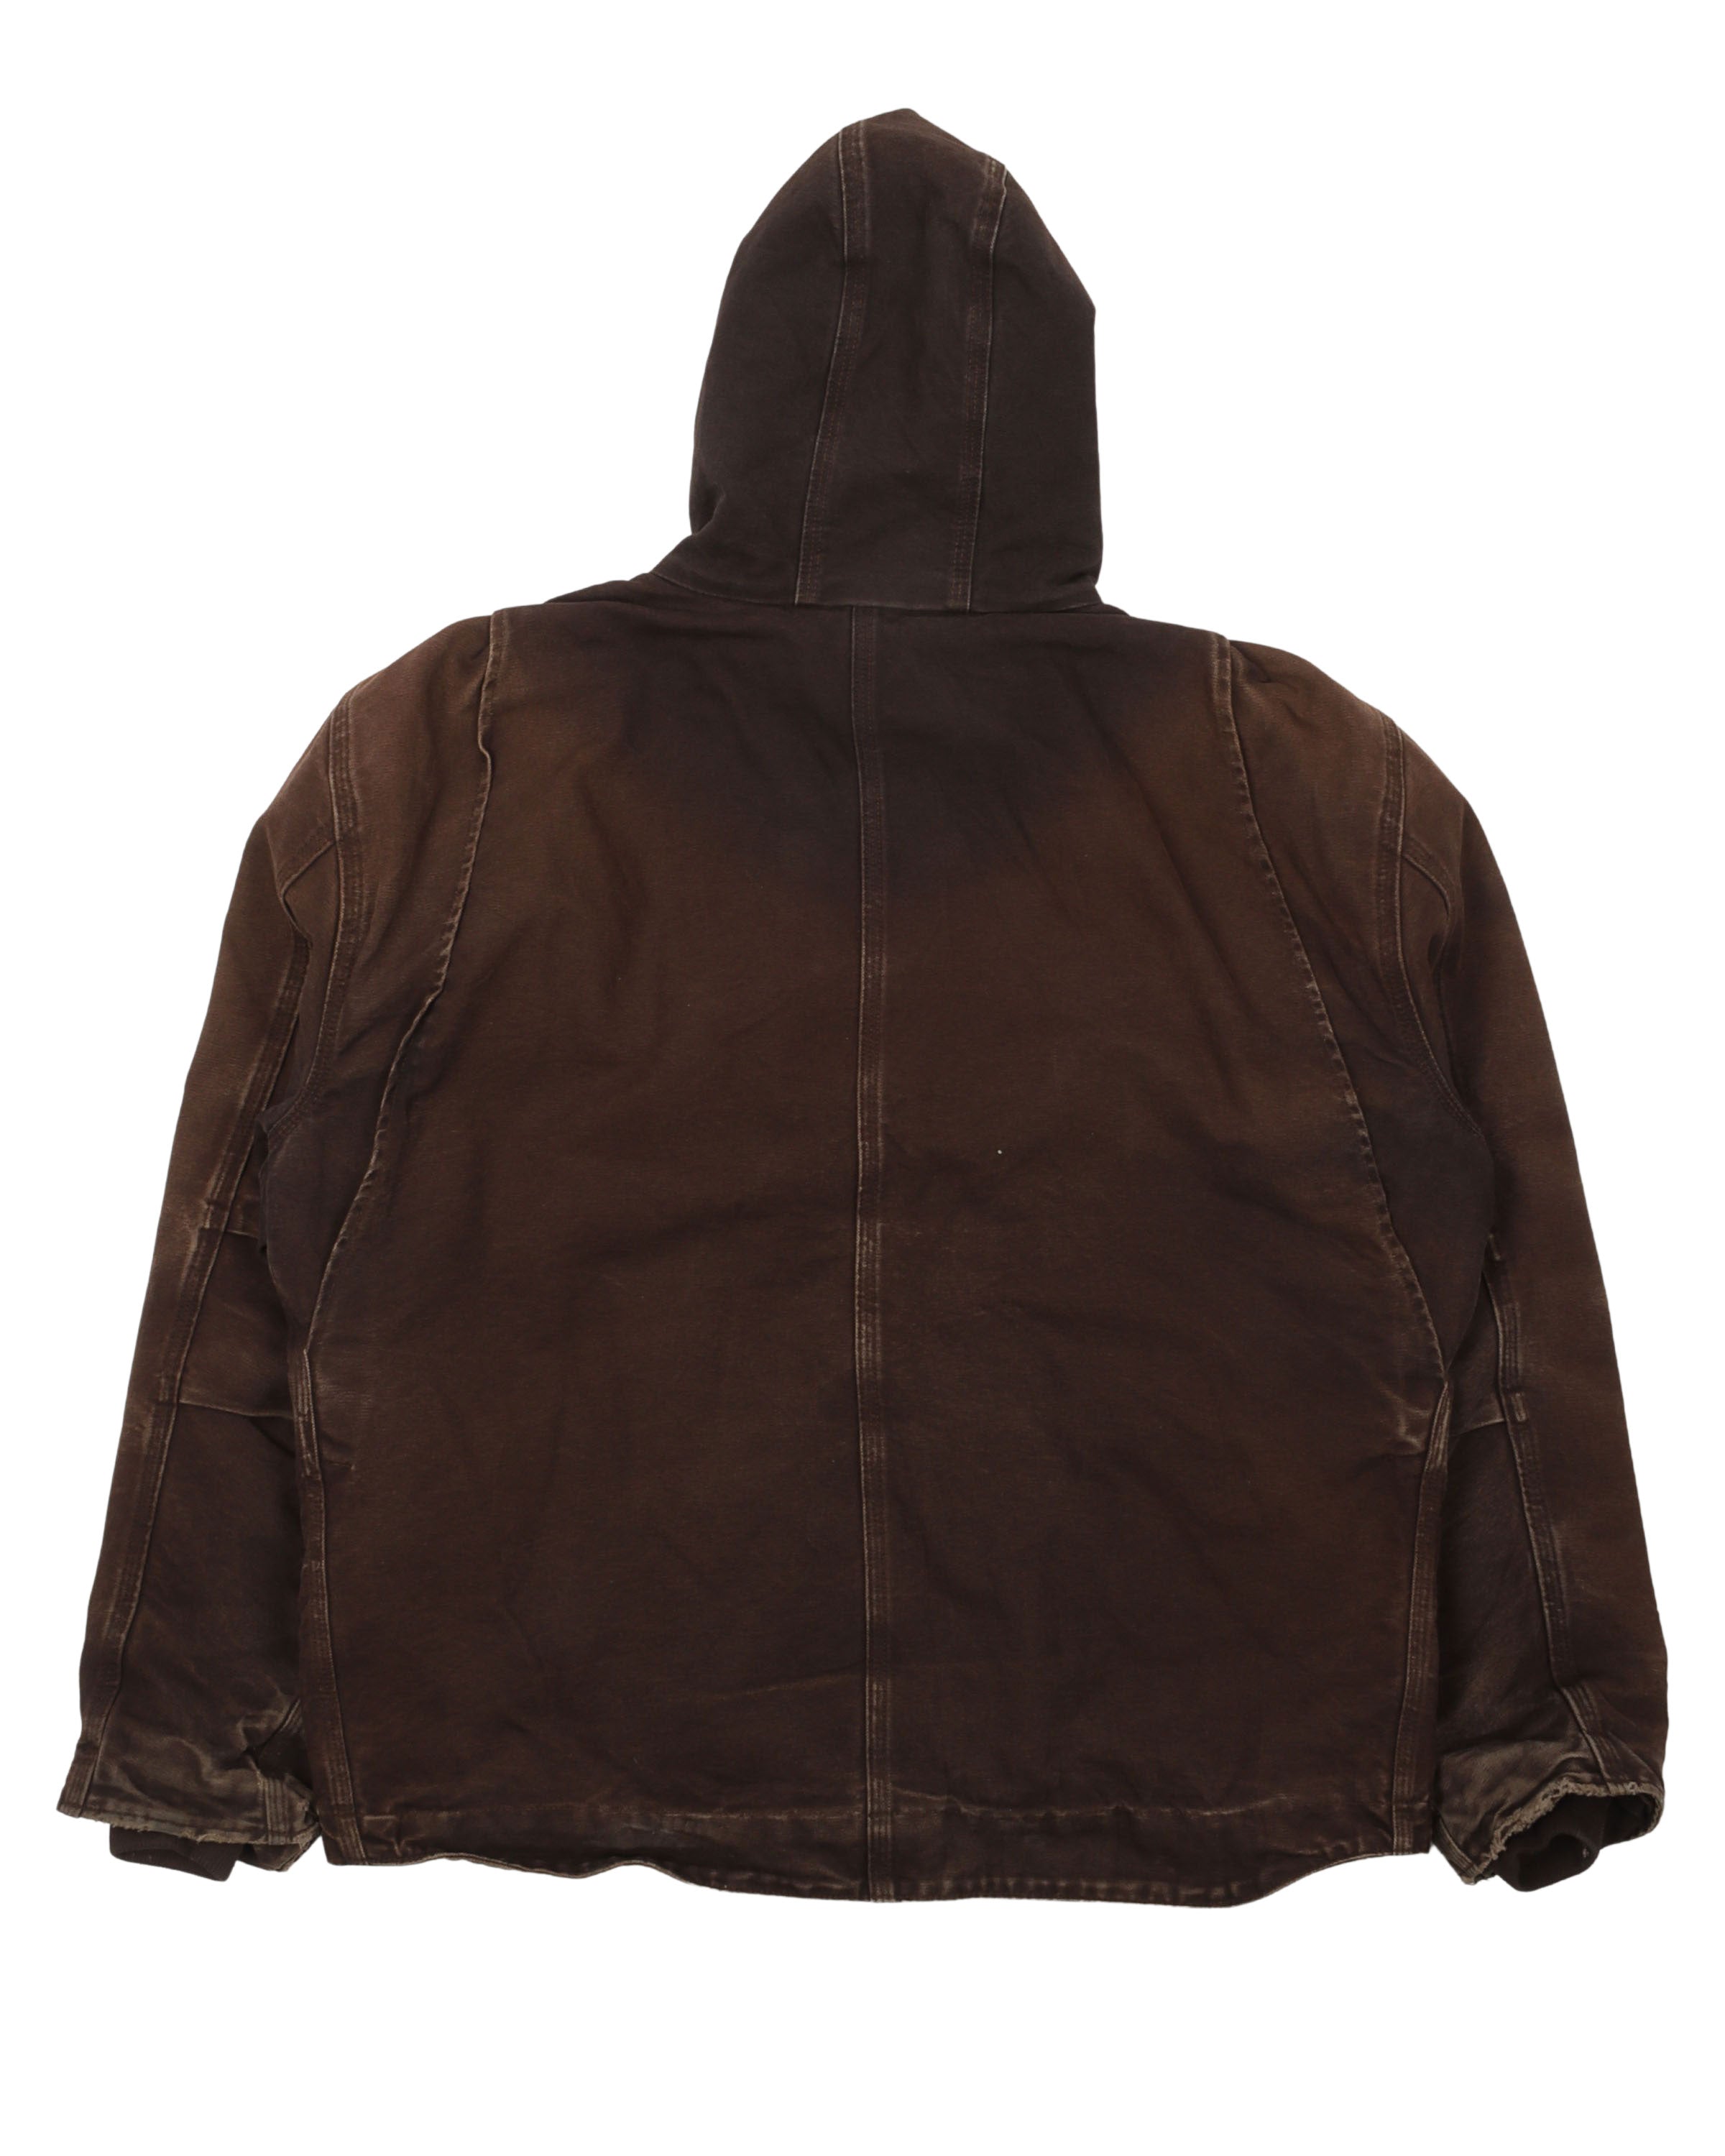 Carhartt Fleece Lined Hooded Work Jacket